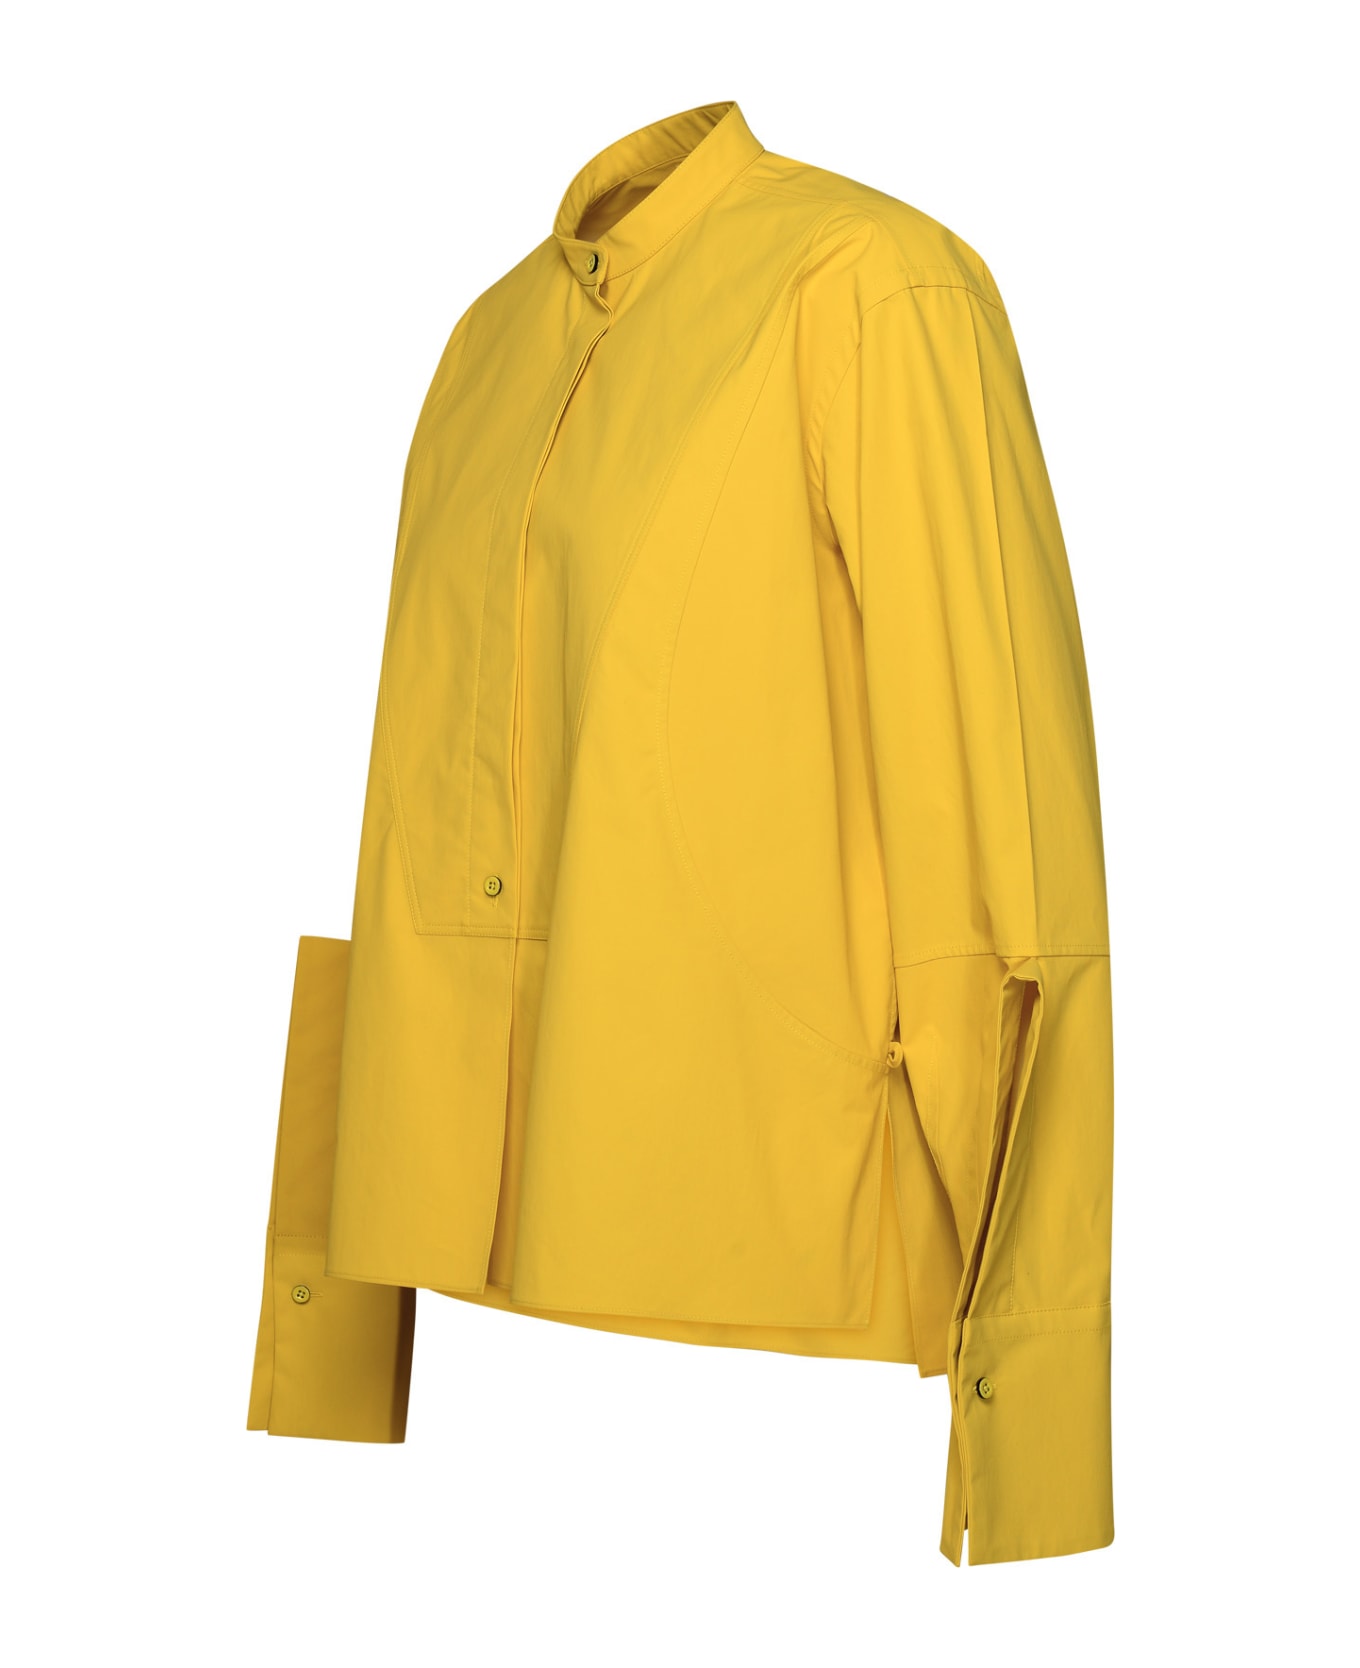 Jil Sander Mustard Cotton Shirt - Yellow